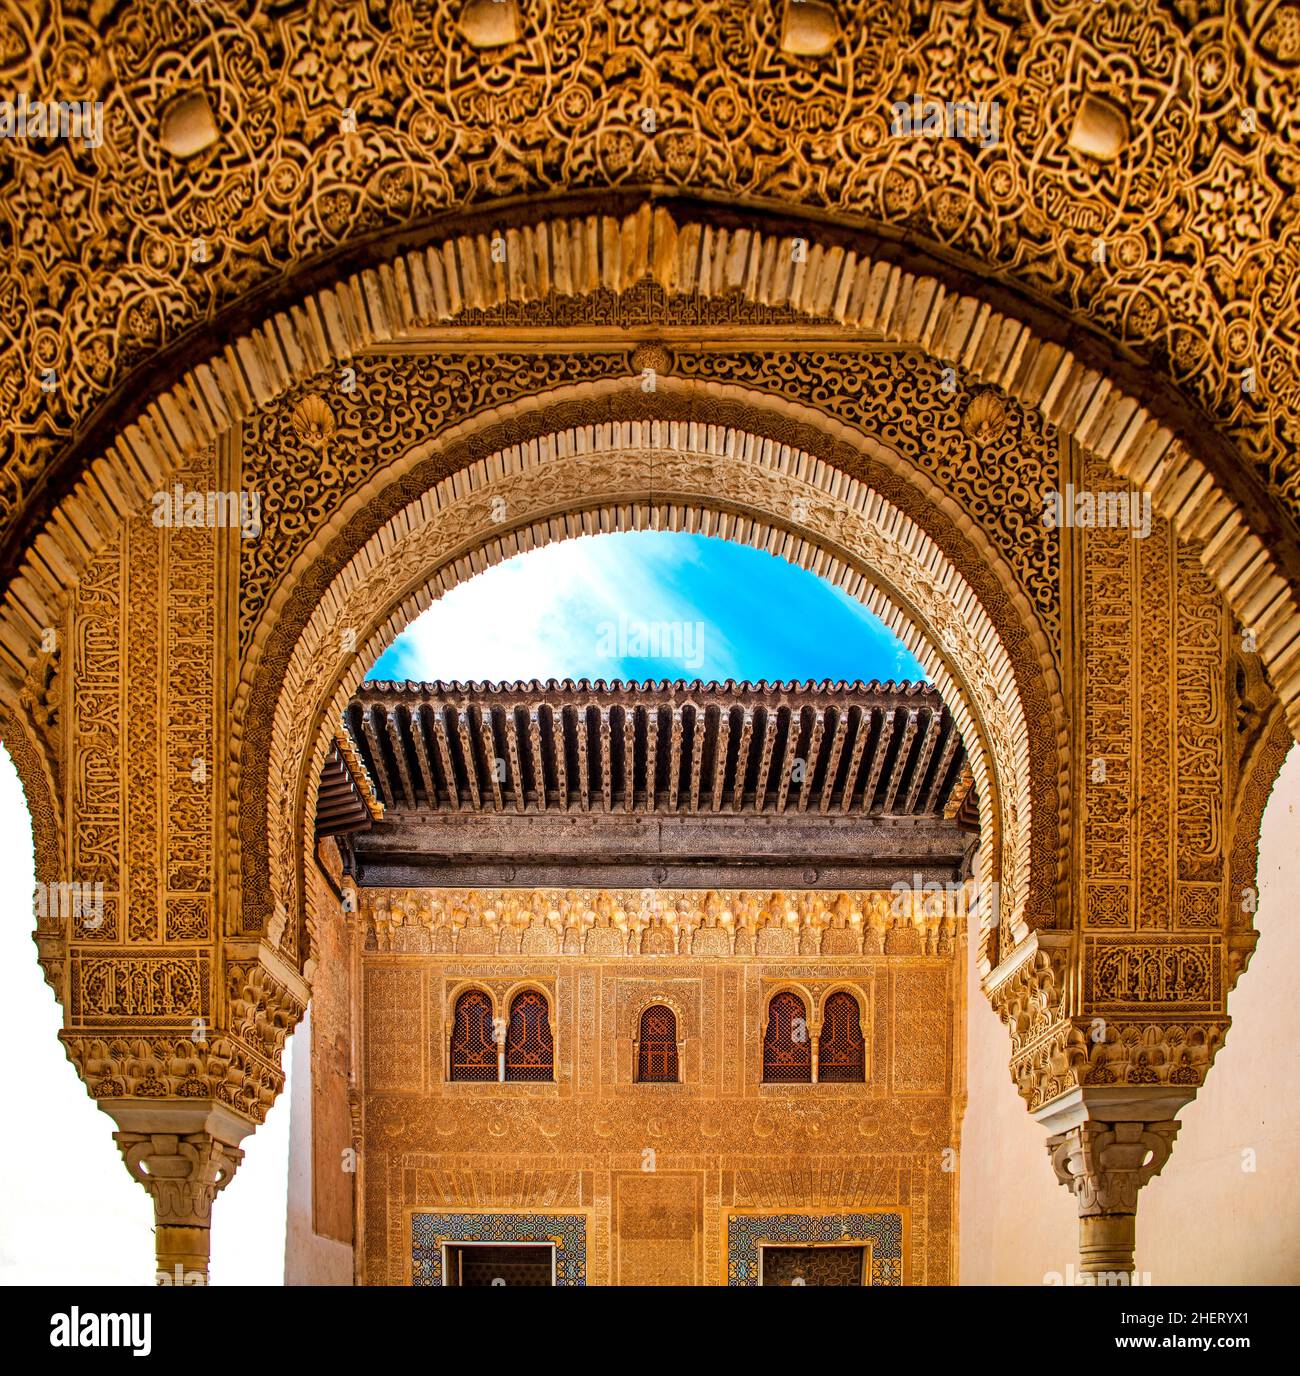 https://c8.alamy.com/comp/2HERYX1/courtyard-of-the-golden-room-with-tile-mosaics-over-the-ceramic-plinths-cuarto-dorado-comares-palace-nasrid-palaces-alhambra-granada-granada-2HERYX1.jpg